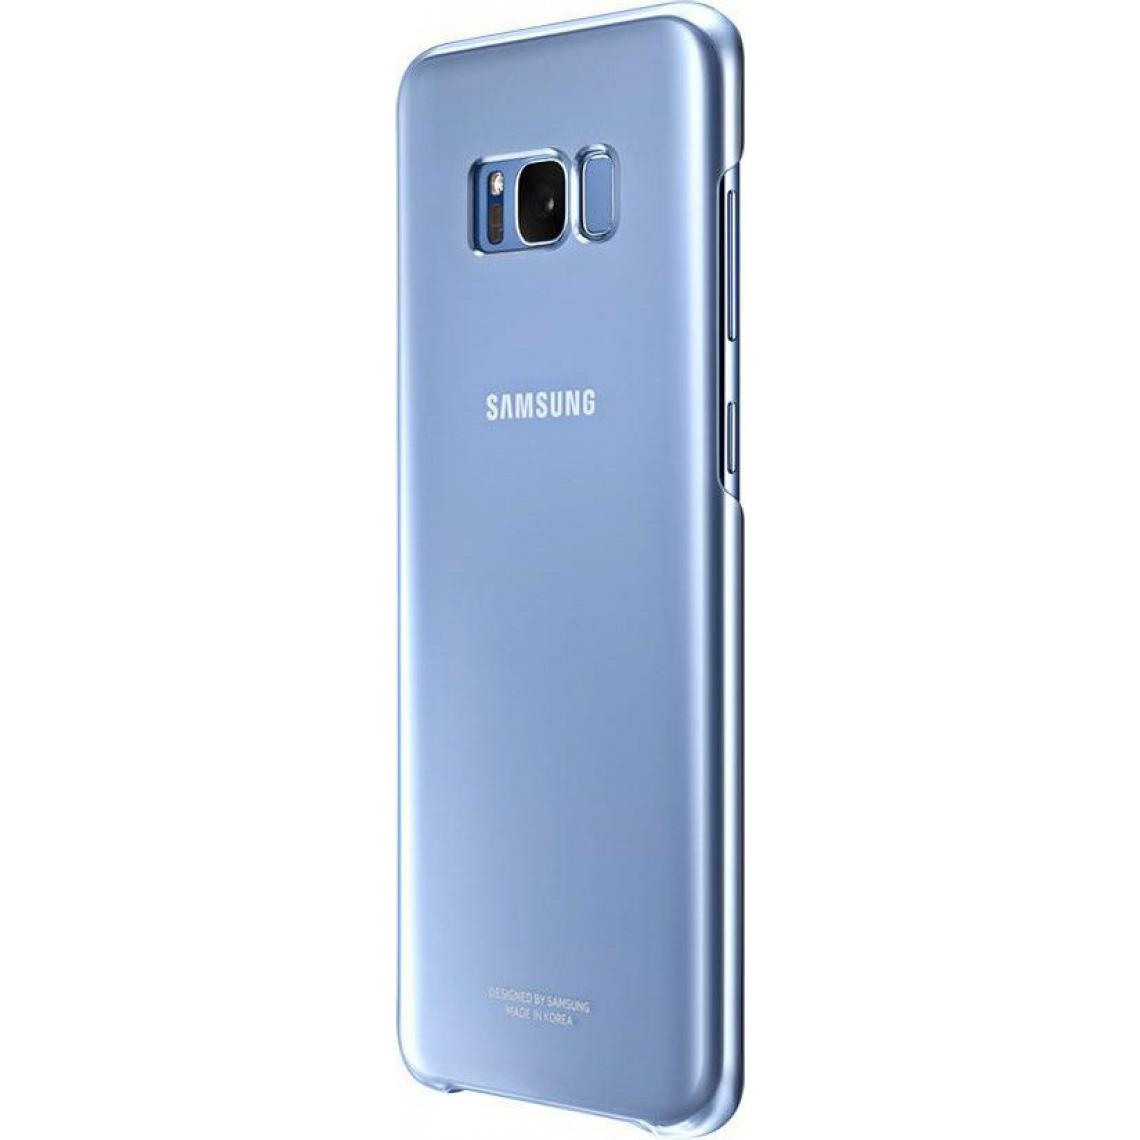 Samsung - Coque smartphone Coque rigide Samsung S8+ bleue - Autres accessoires smartphone